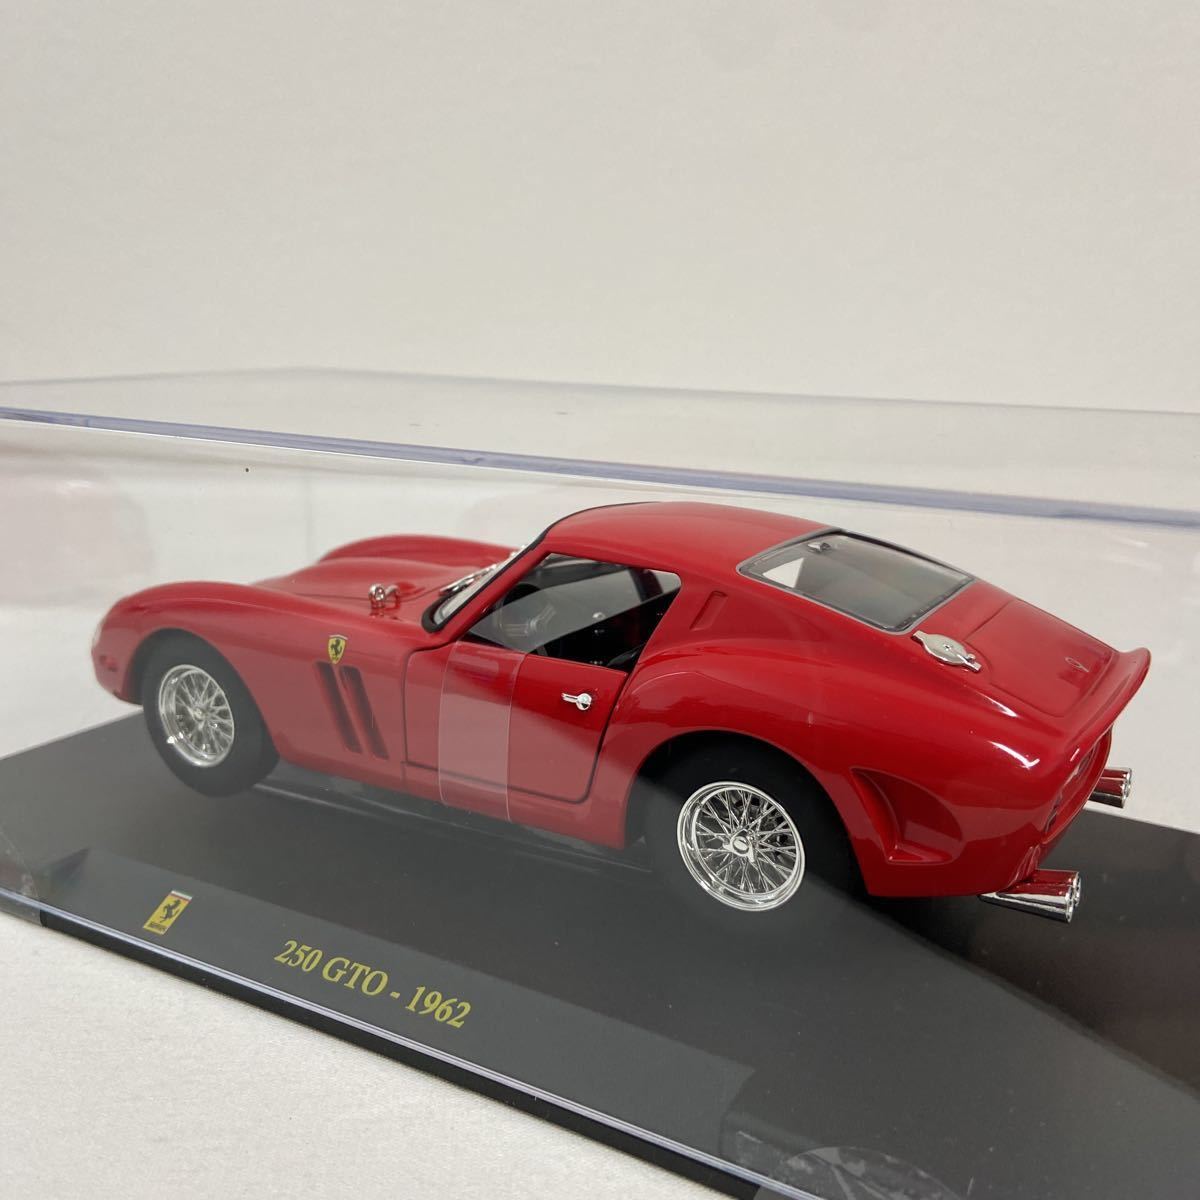  der Goss tea nire* grande .* Ferrari collection 1/24 #10 FERRARI 250GTO 1962 year Red final product minicar model car 